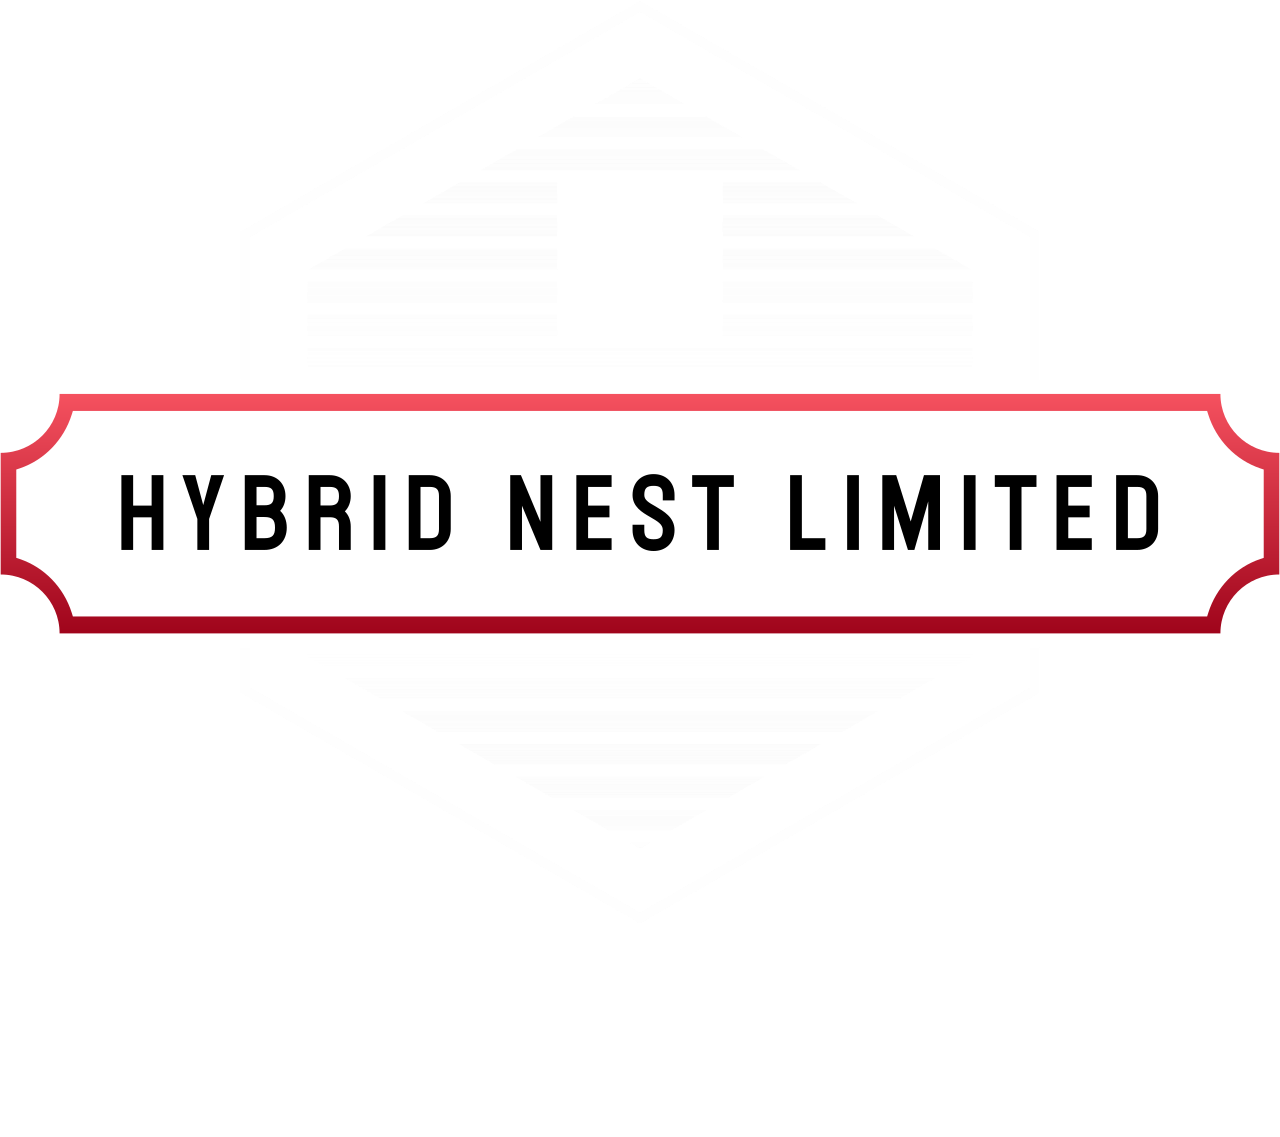 Hybrid Nest Limited's logo